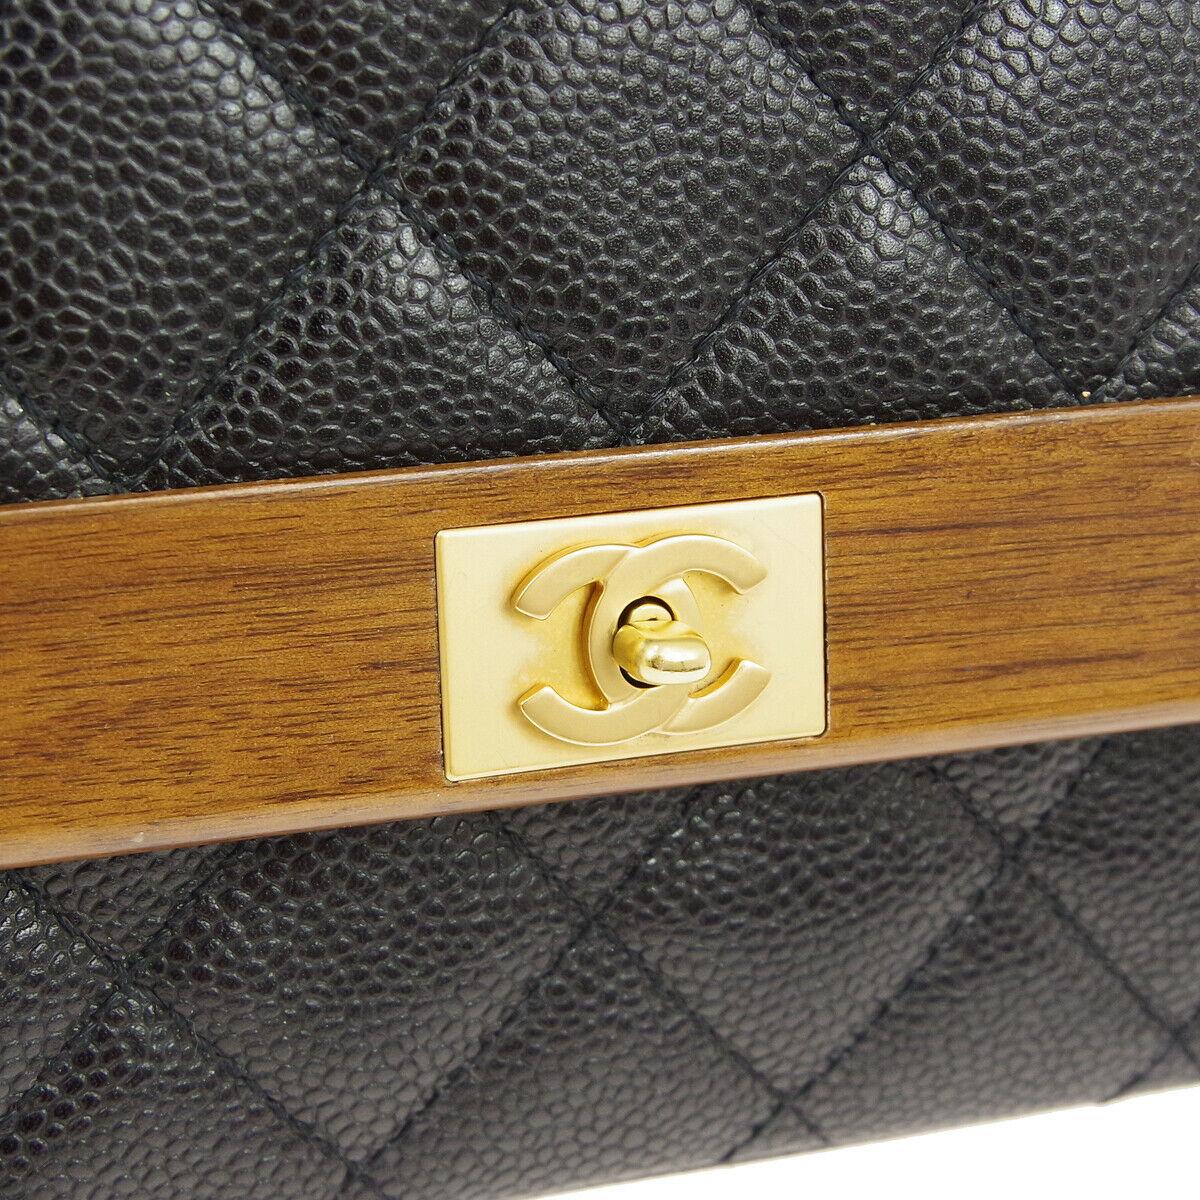 Chanel Black Leather Brown Wood Gold Evening Shoulder Single Flap Bag

Caviar leather
Wood
Leather lining
Date code present
Made in France
Shoulder strap drop 19